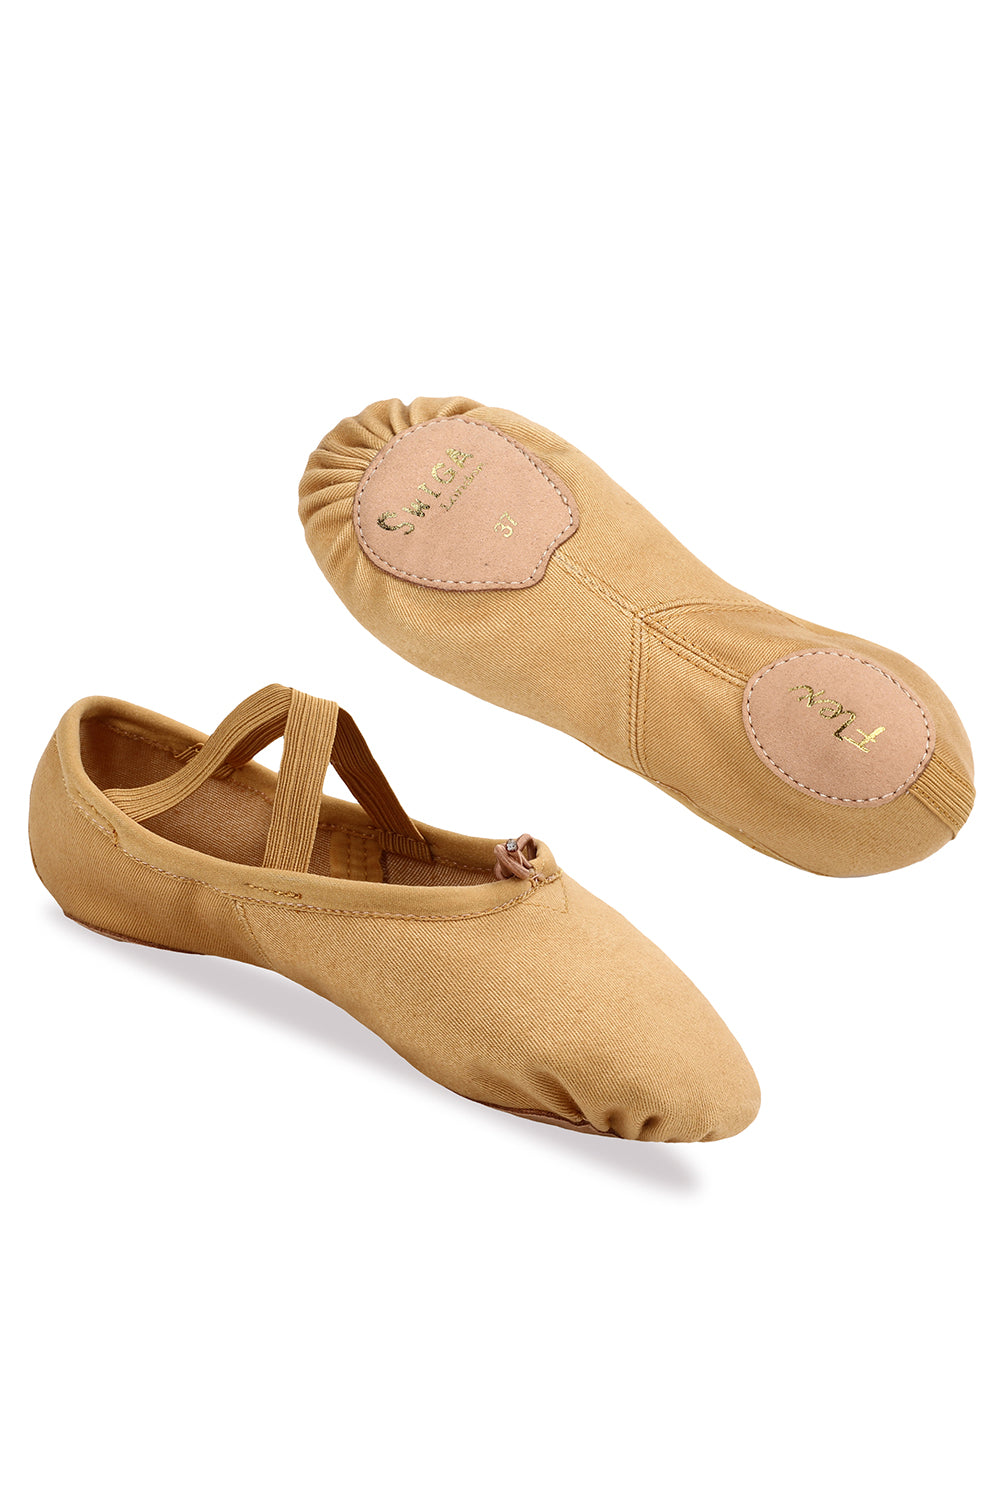 Br-8 Swiga Dance Shoes